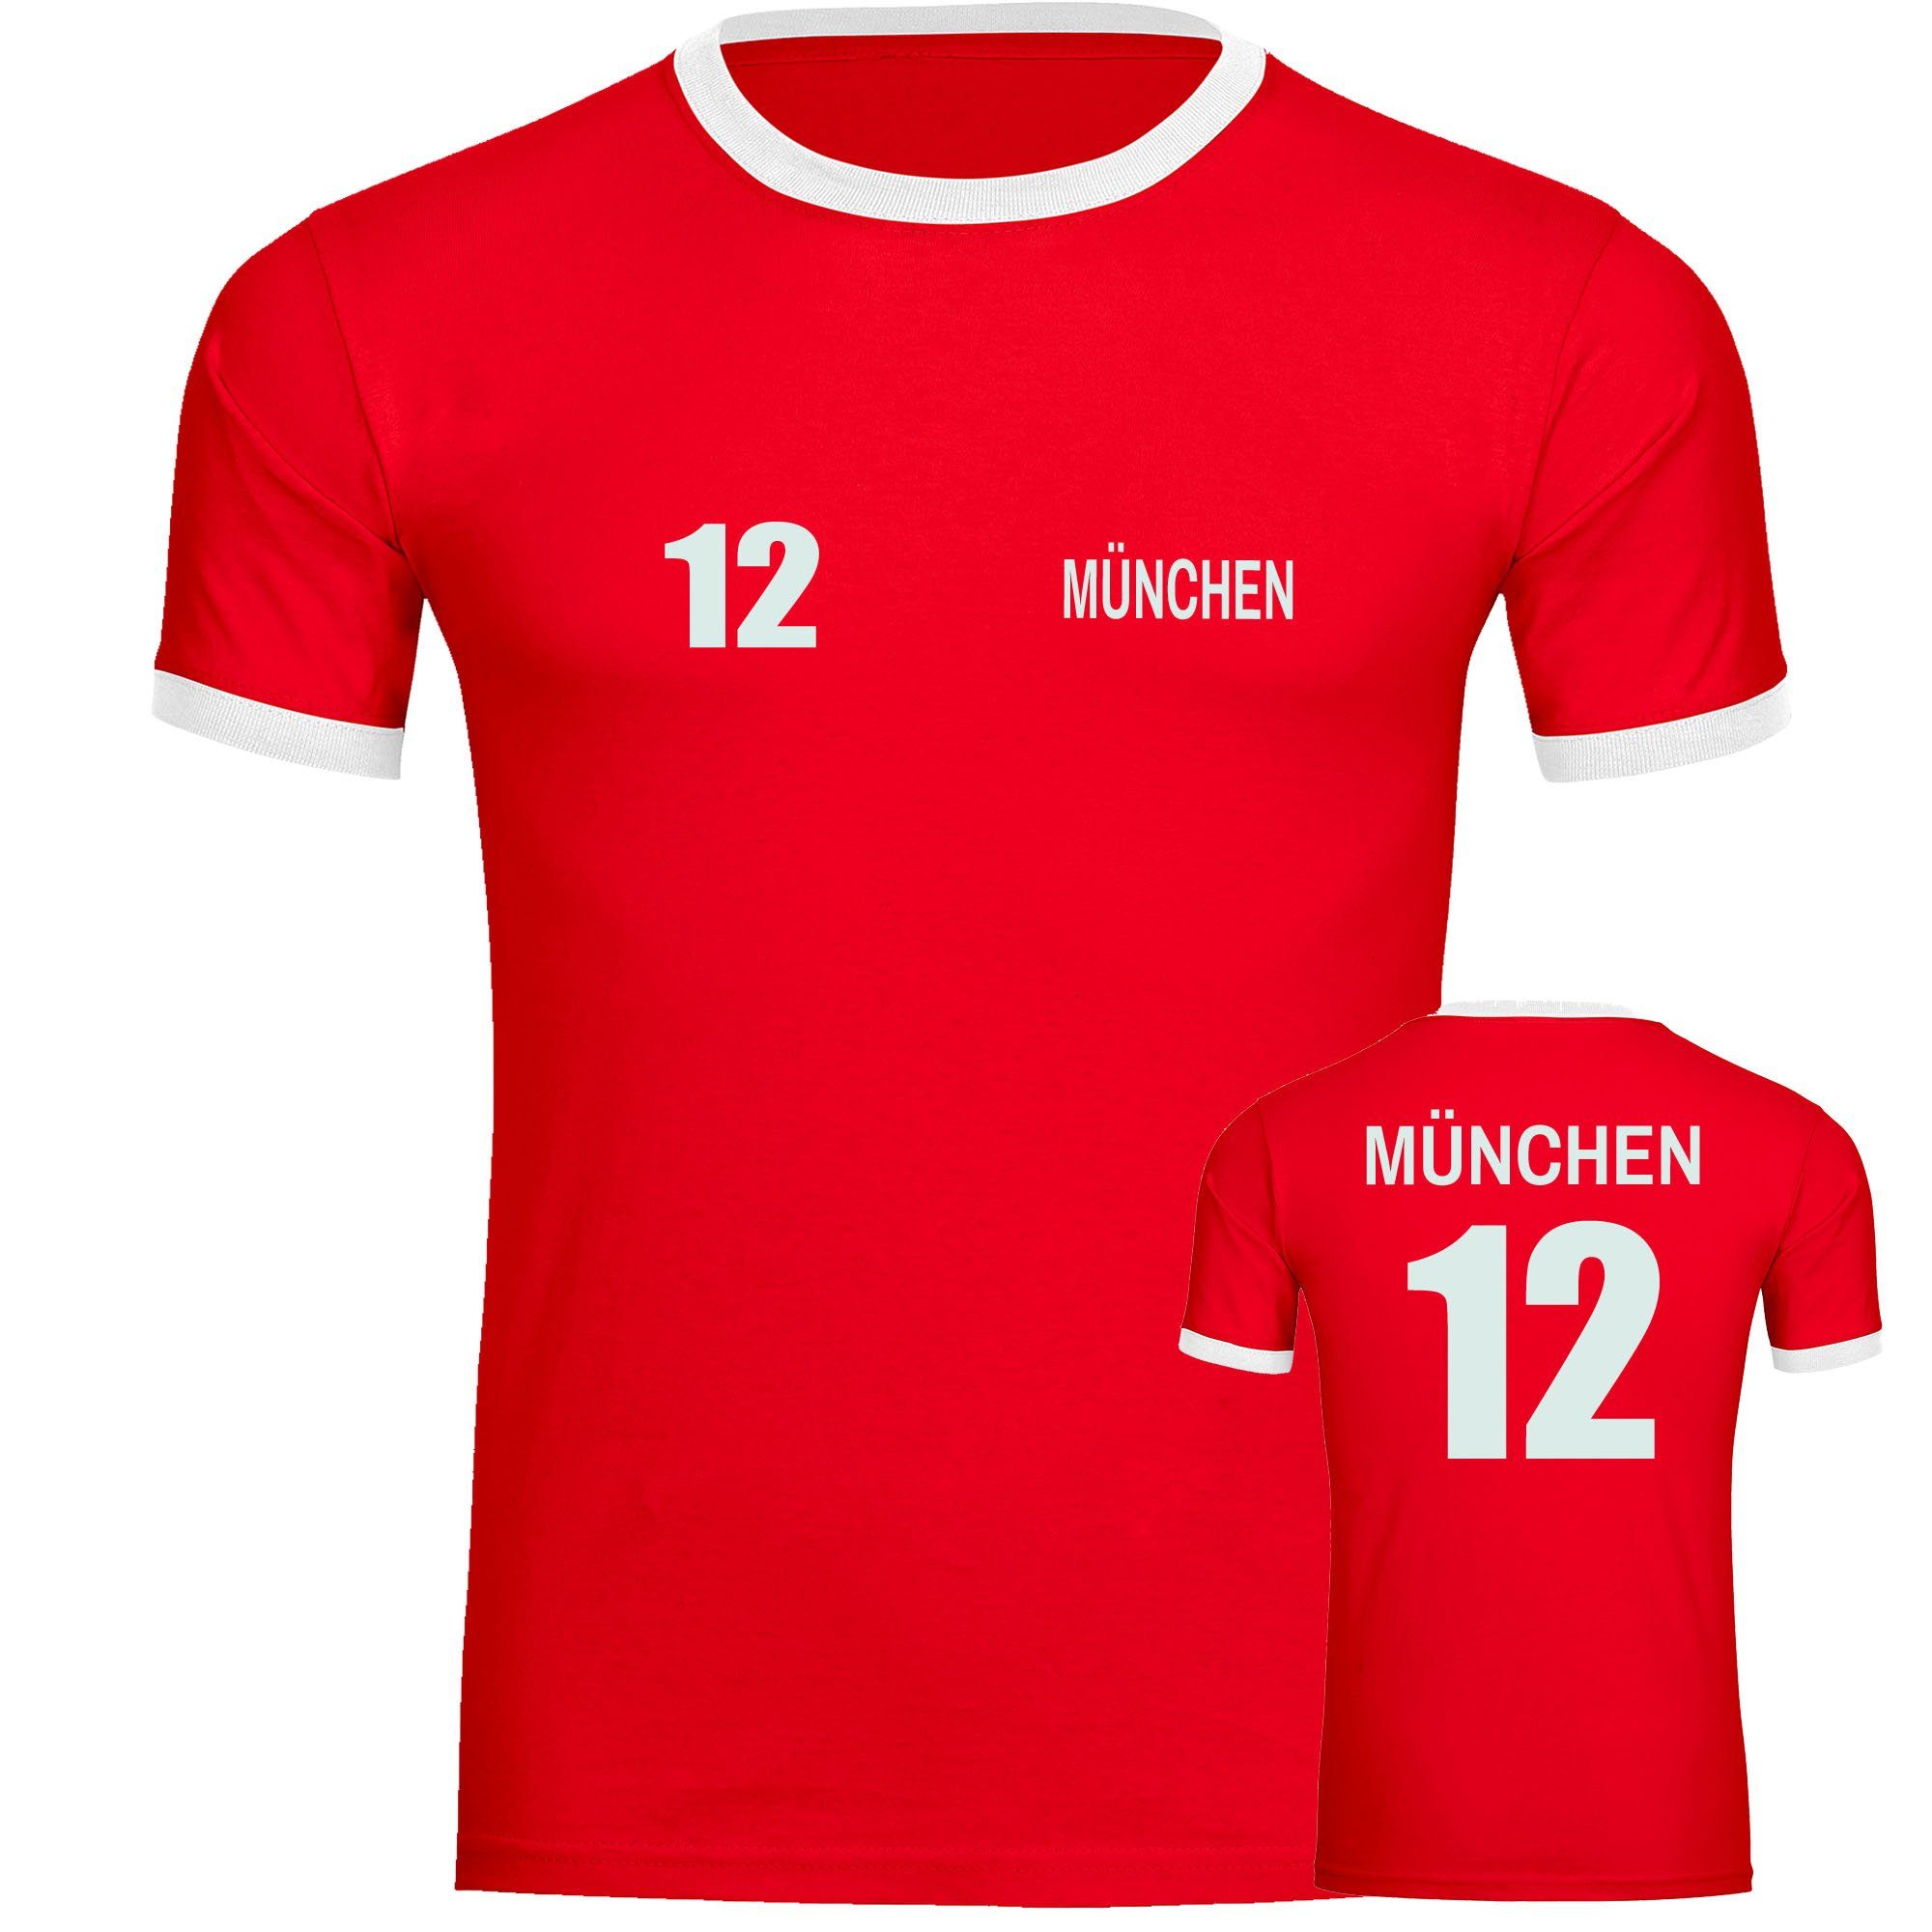 multifanshop T-Shirt Kontrast München rot - Trikot 12 - Männer